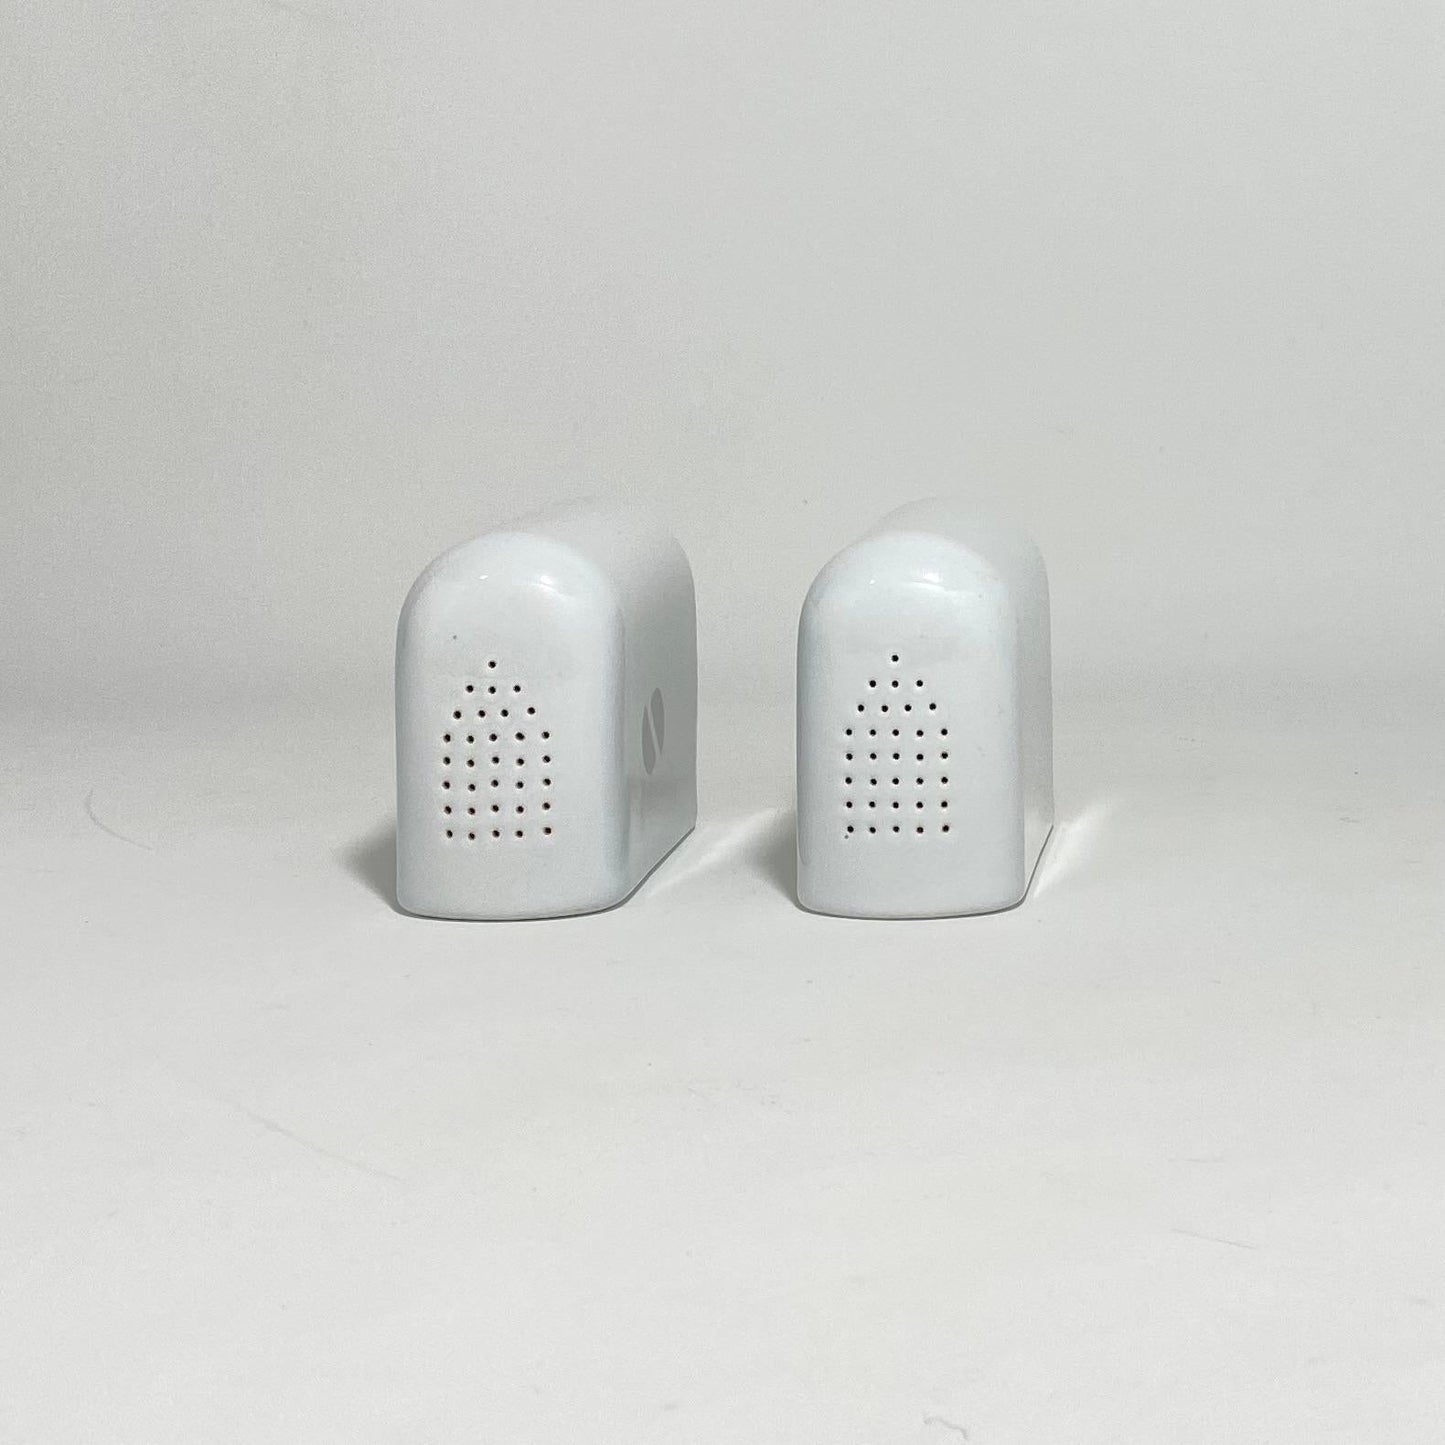 Bauhaus Ceramic Salt and Pepper Shaker Set